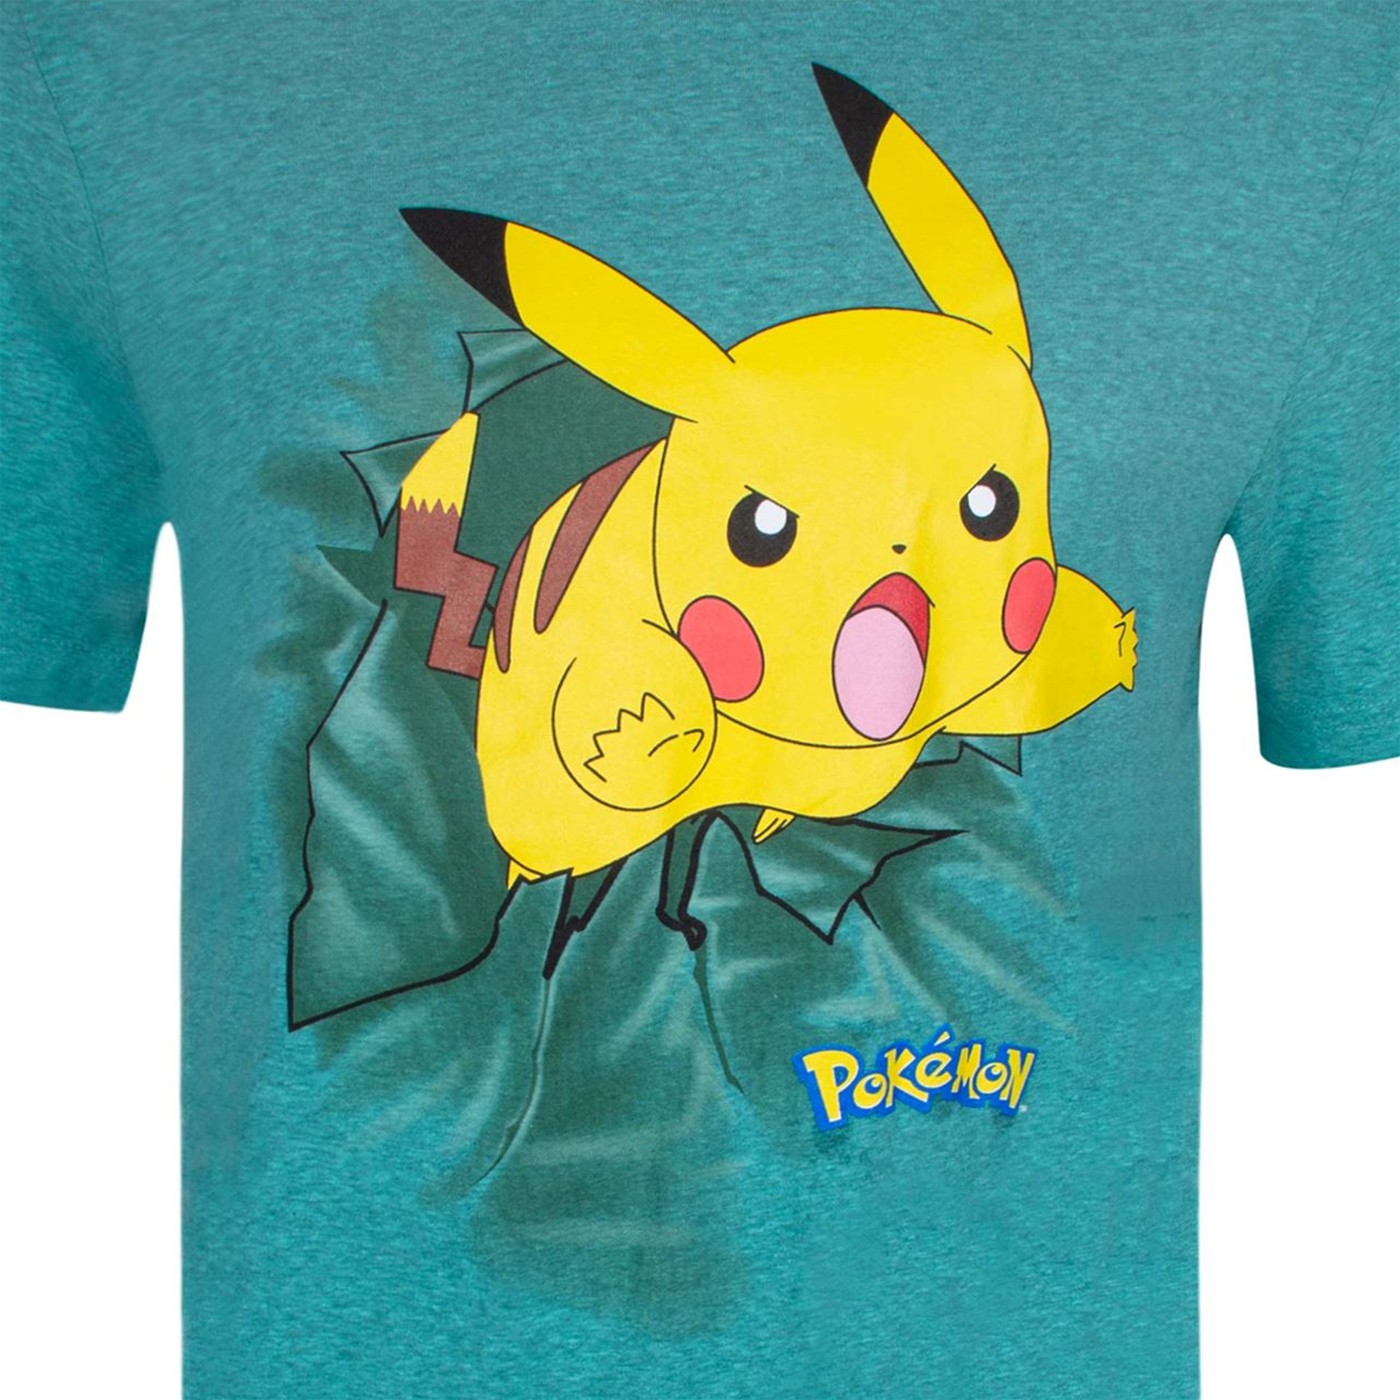 Pokemon Pikachu Jump Attack Men's Blue-Green T-Shirt